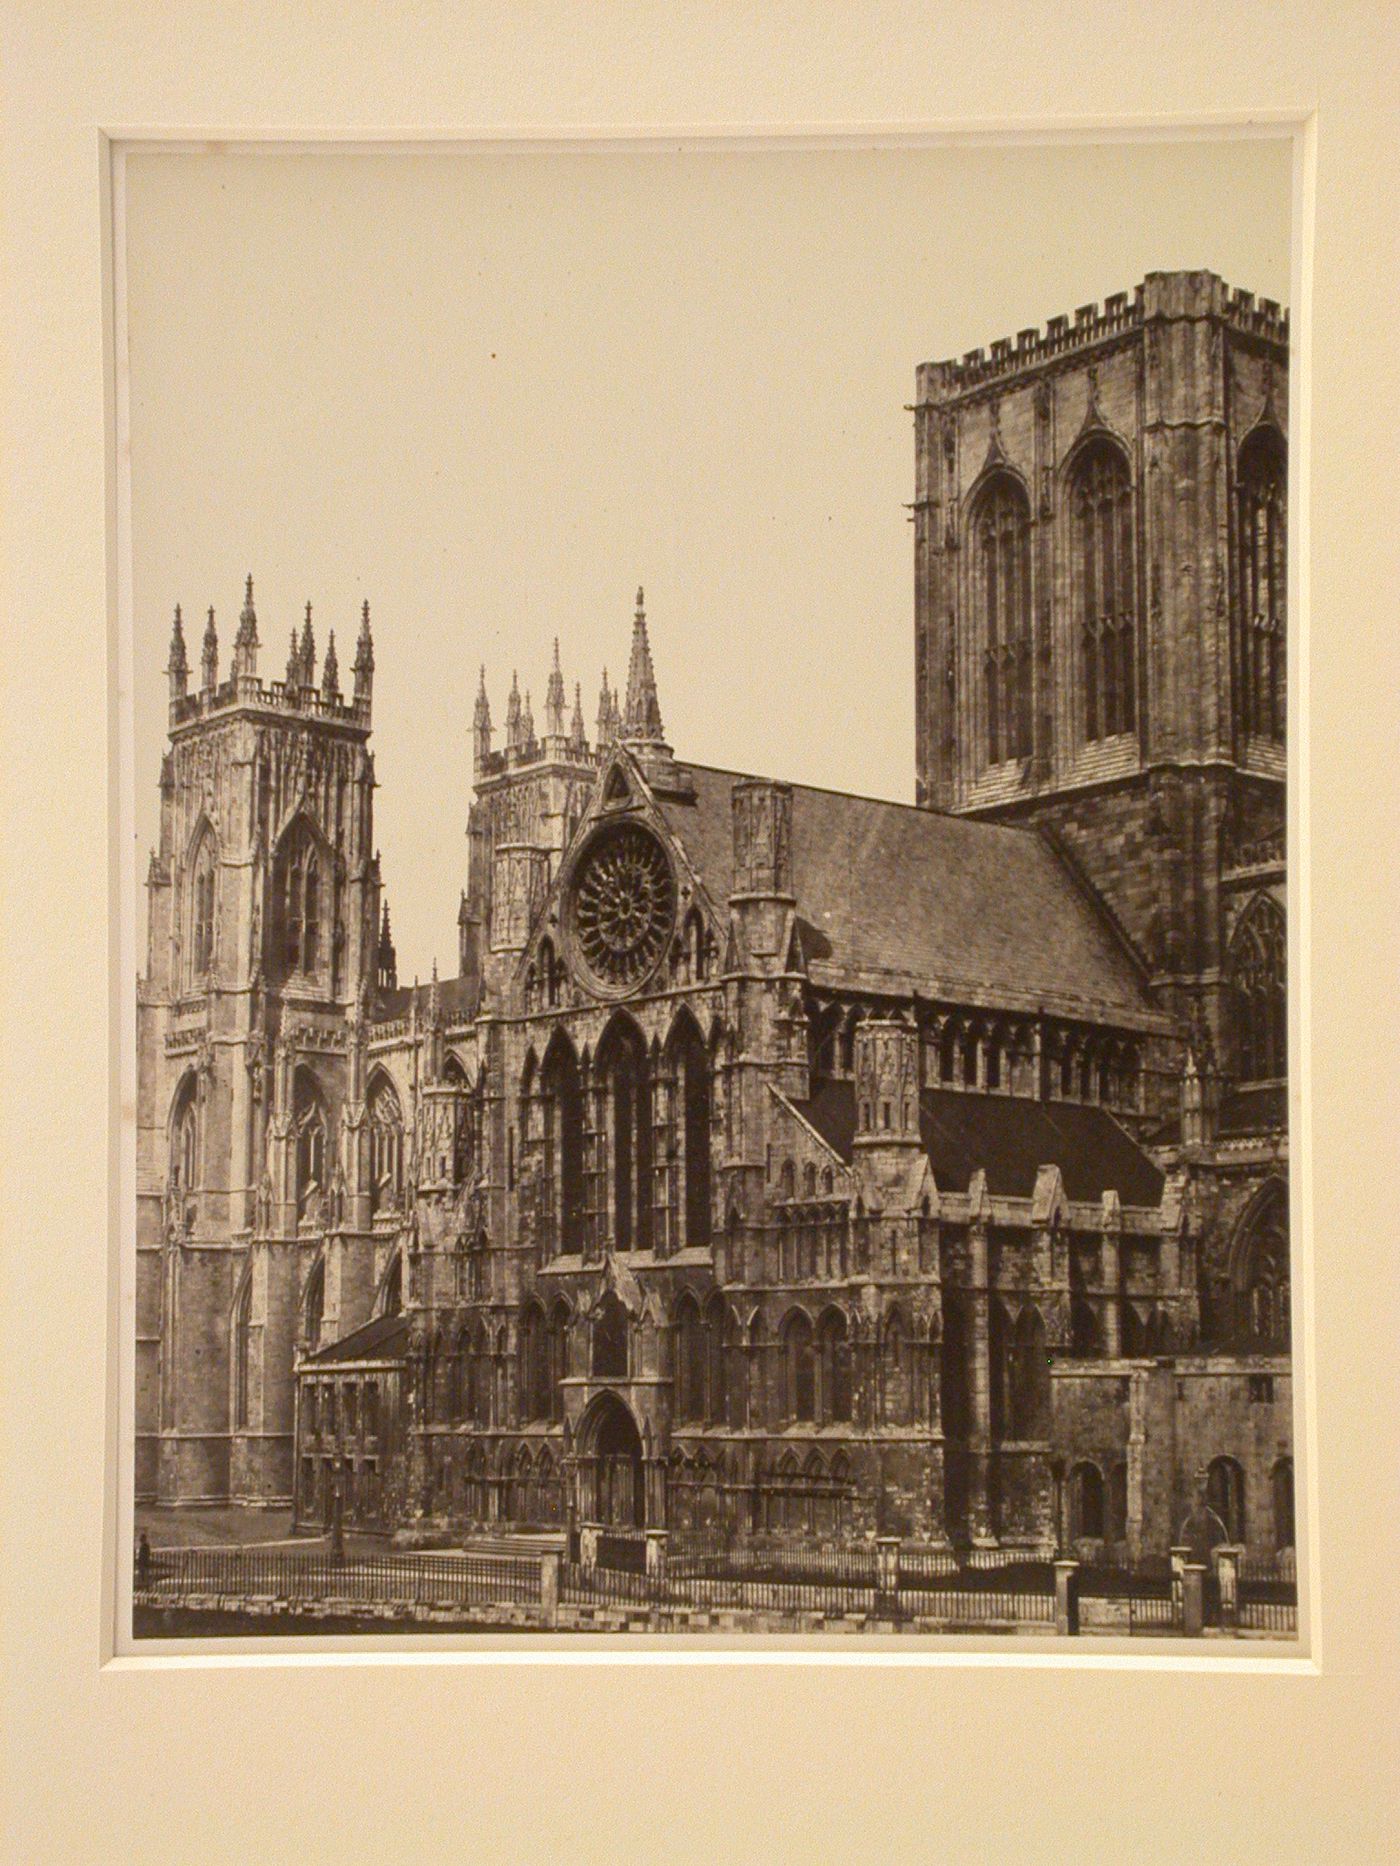 General view of exterior of York Minster, including south transept, York, England